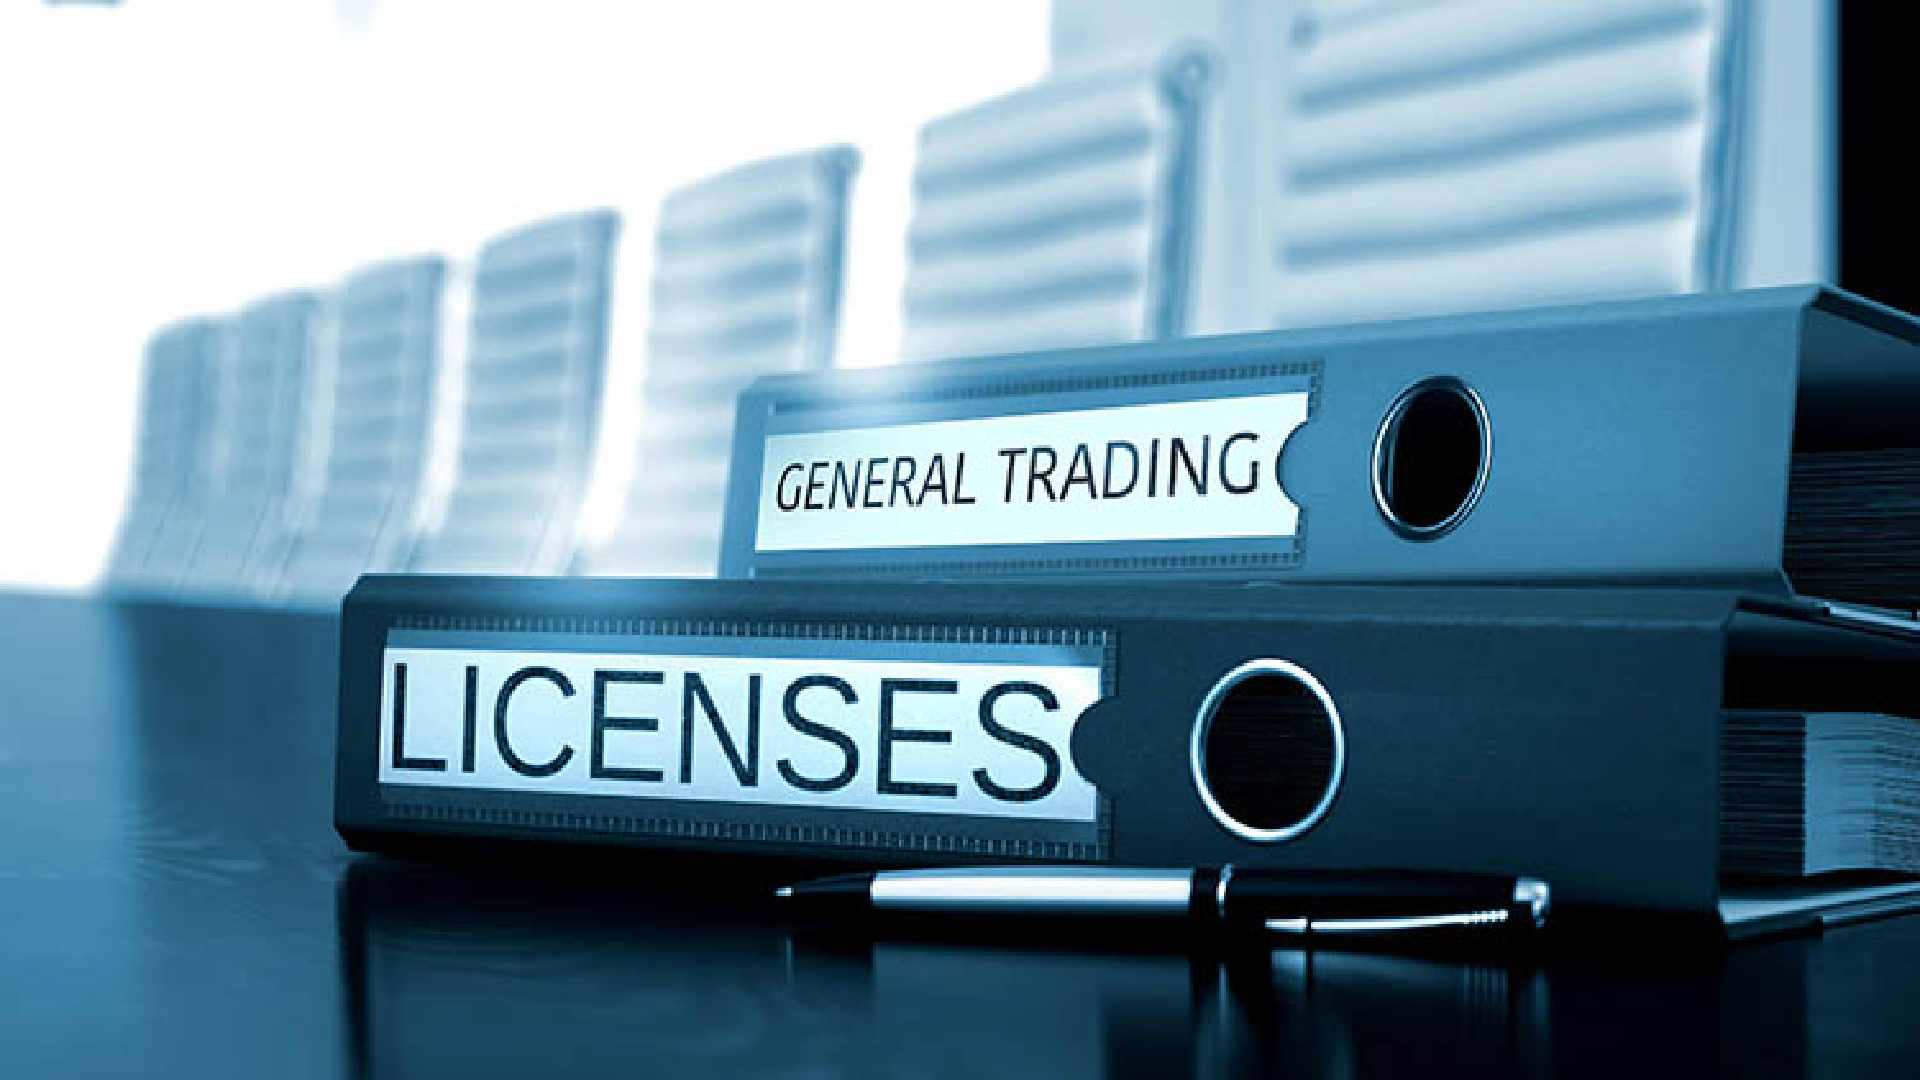 general trading license in Dubai